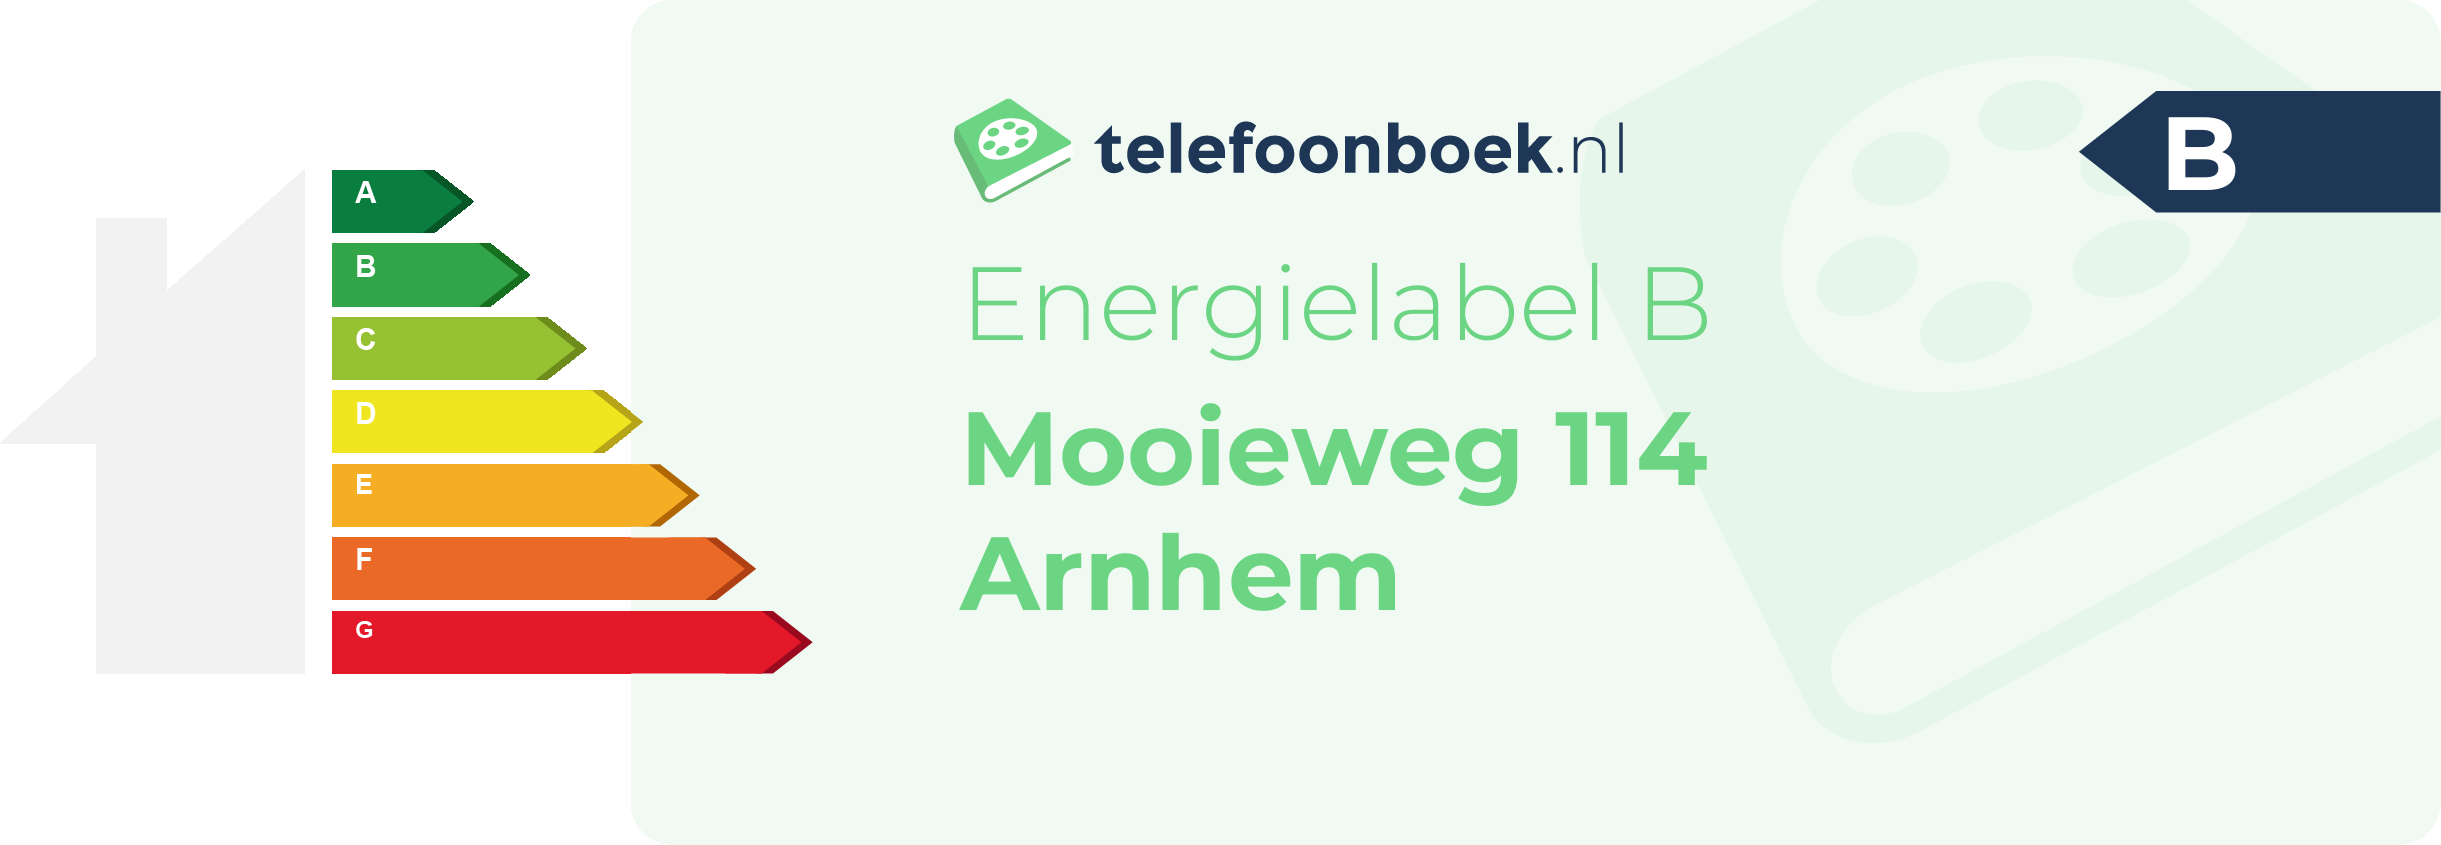 Energielabel Mooieweg 114 Arnhem